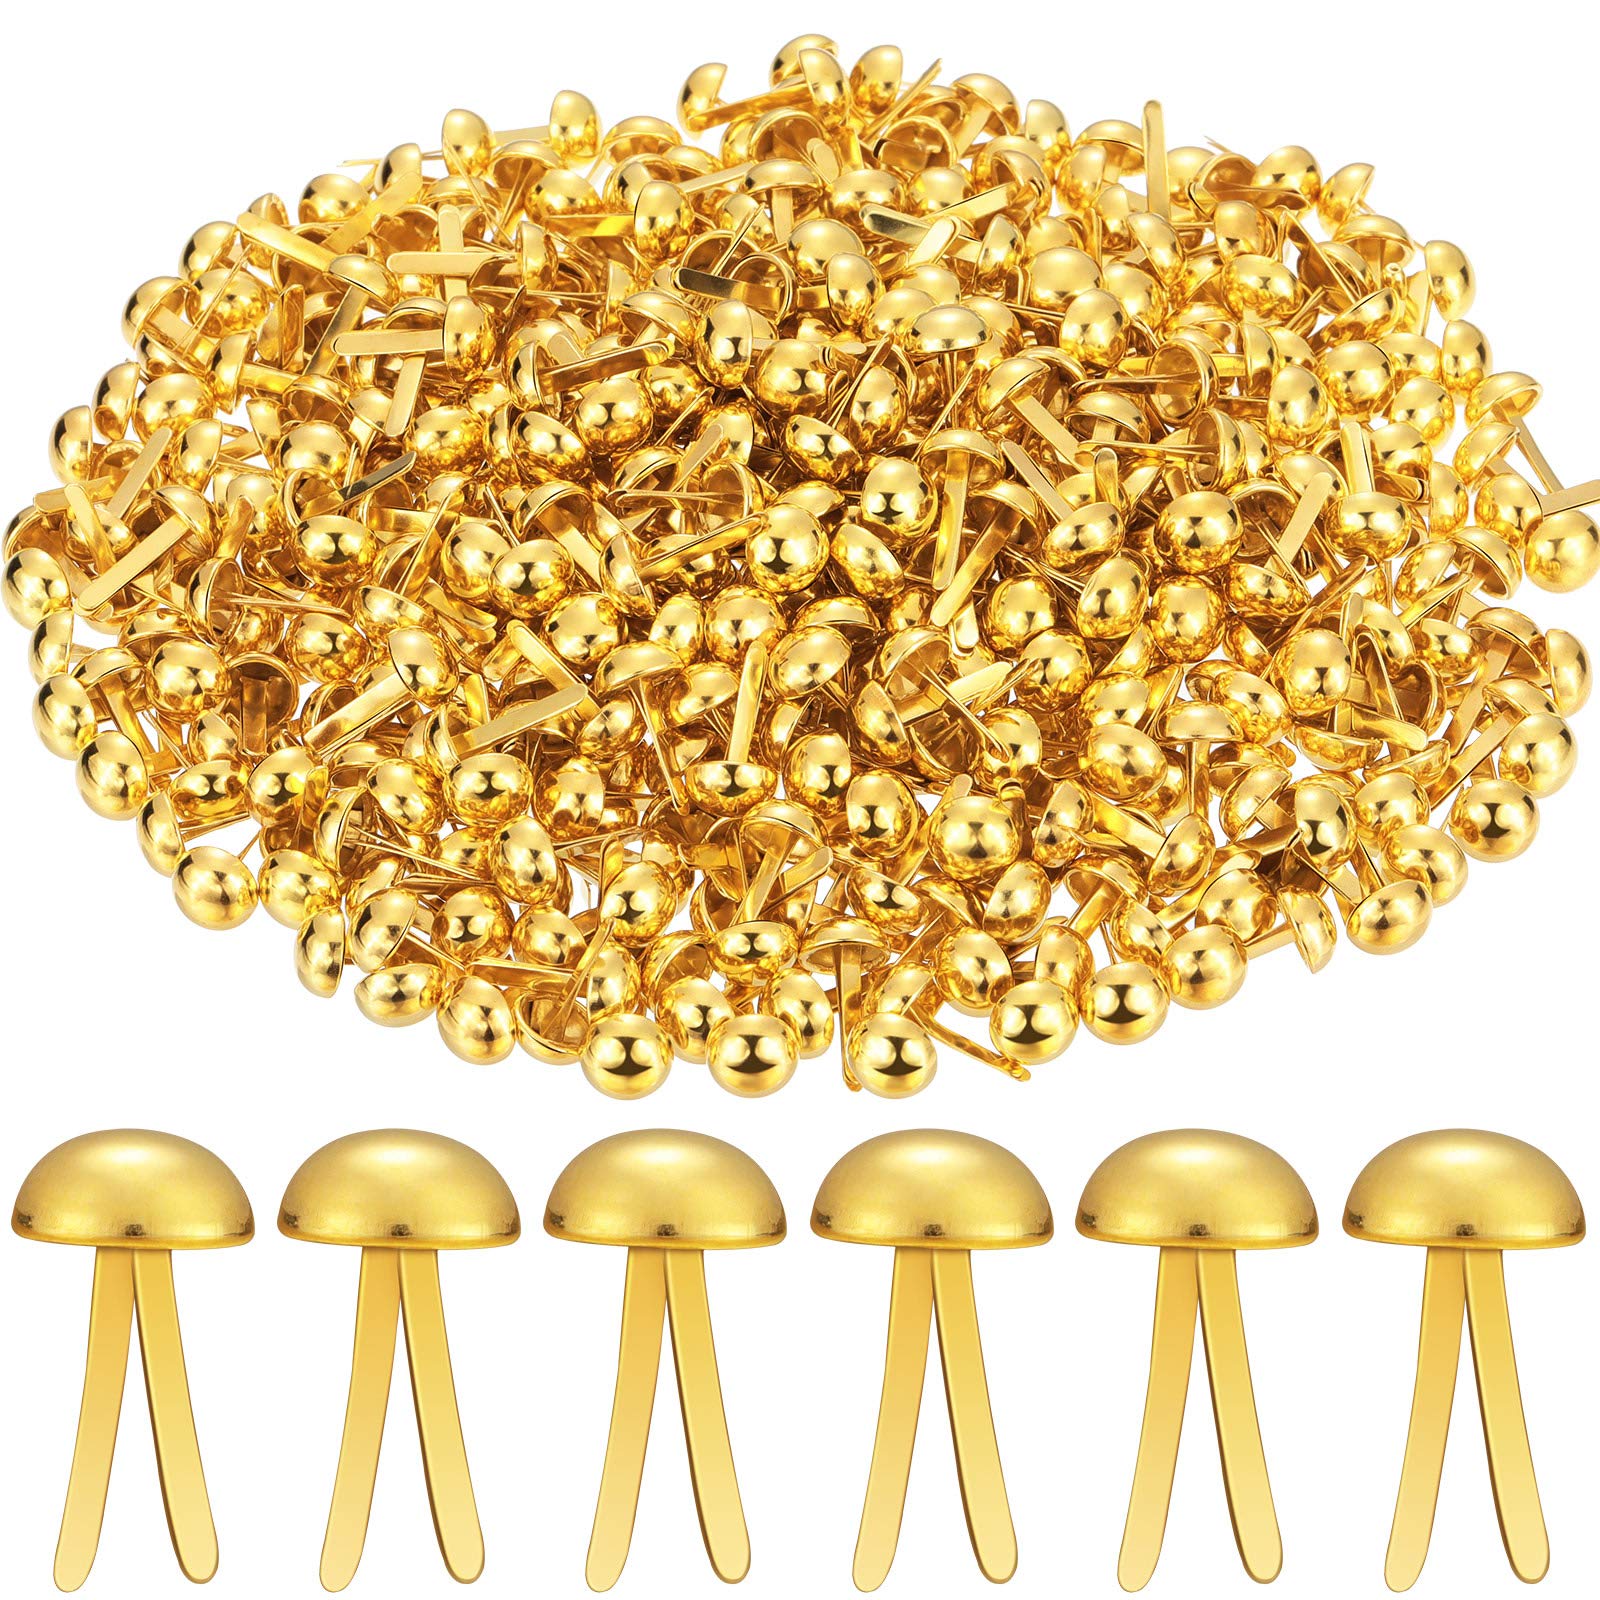 500 Pieces Paper Brass Fasteners Brass Brads Round Fasteners for Kids Craft  Art Crafting School Project Decorative Scrapbooking DIY Supplies(Golden,0.3  x 0.6 Inch) Golden 0.3 x 0.6 Inch